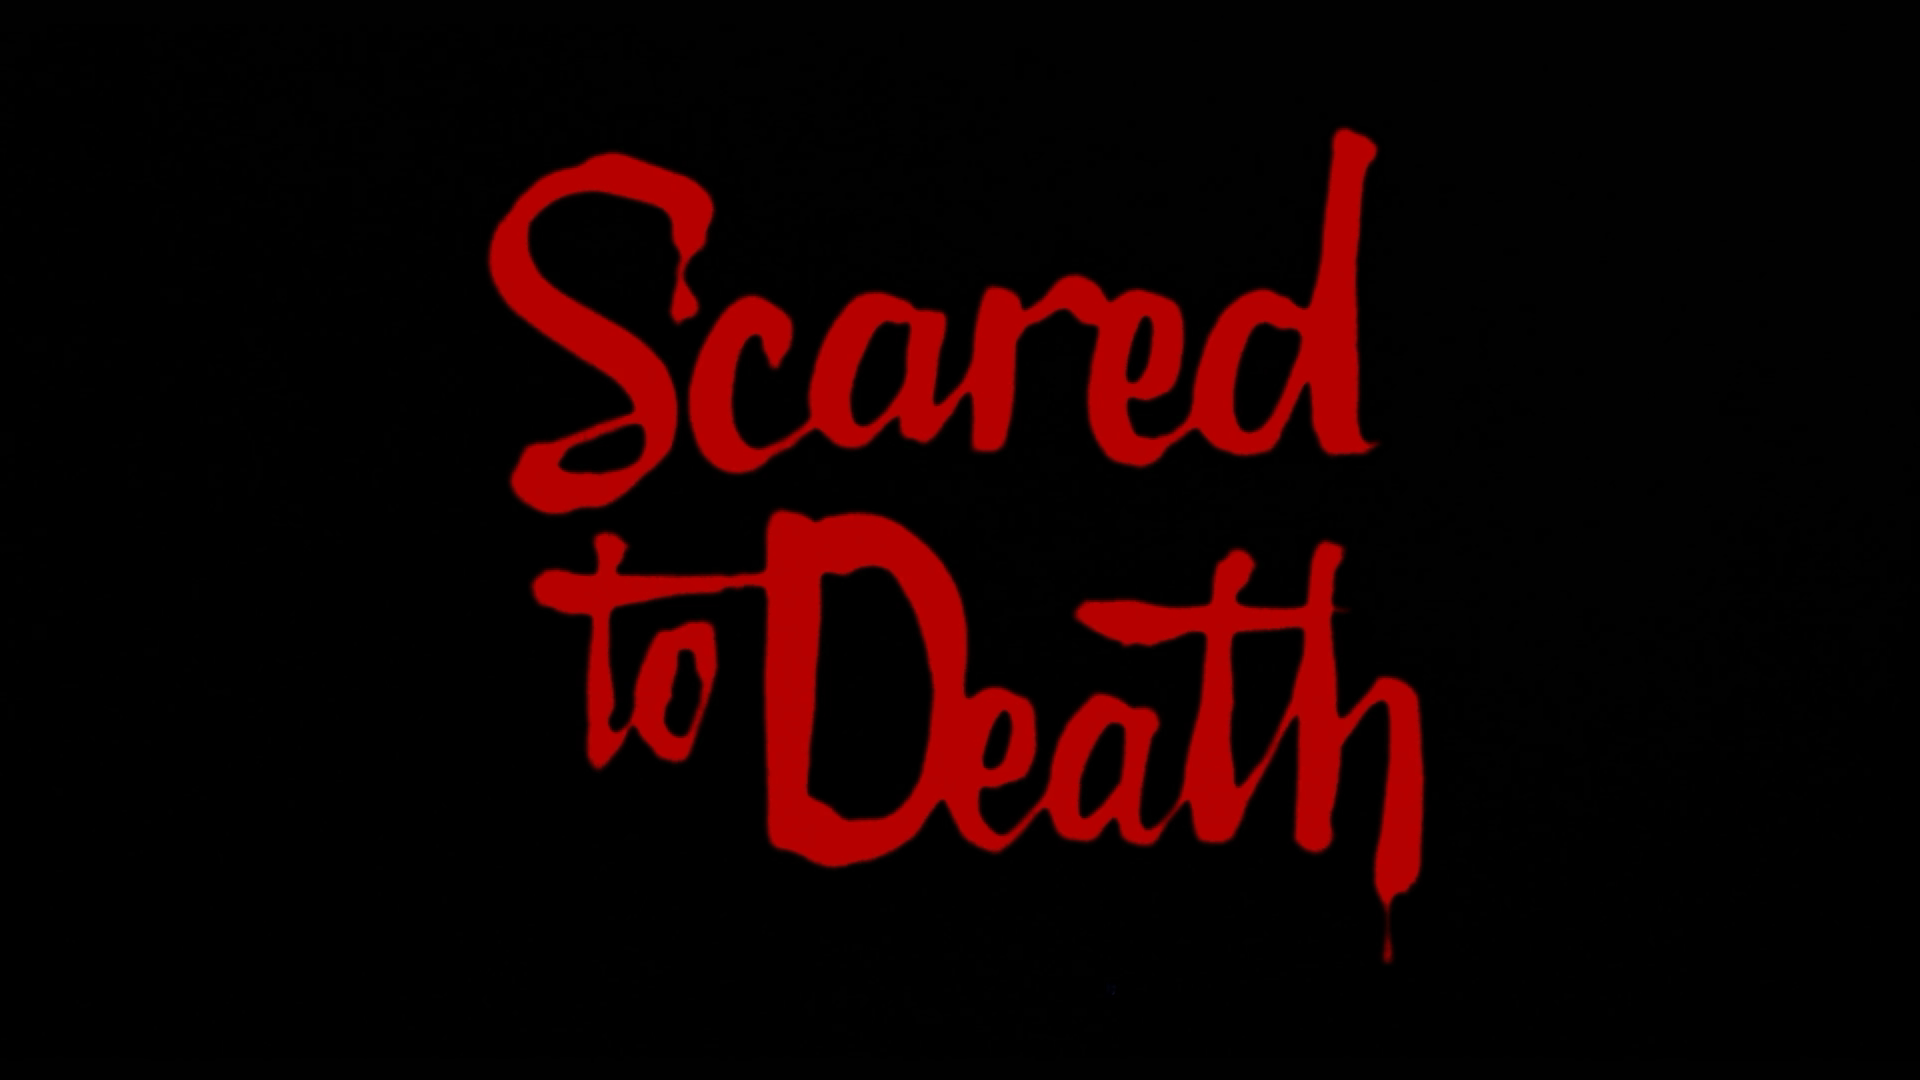 Scared to Death theatrical cut cap 1